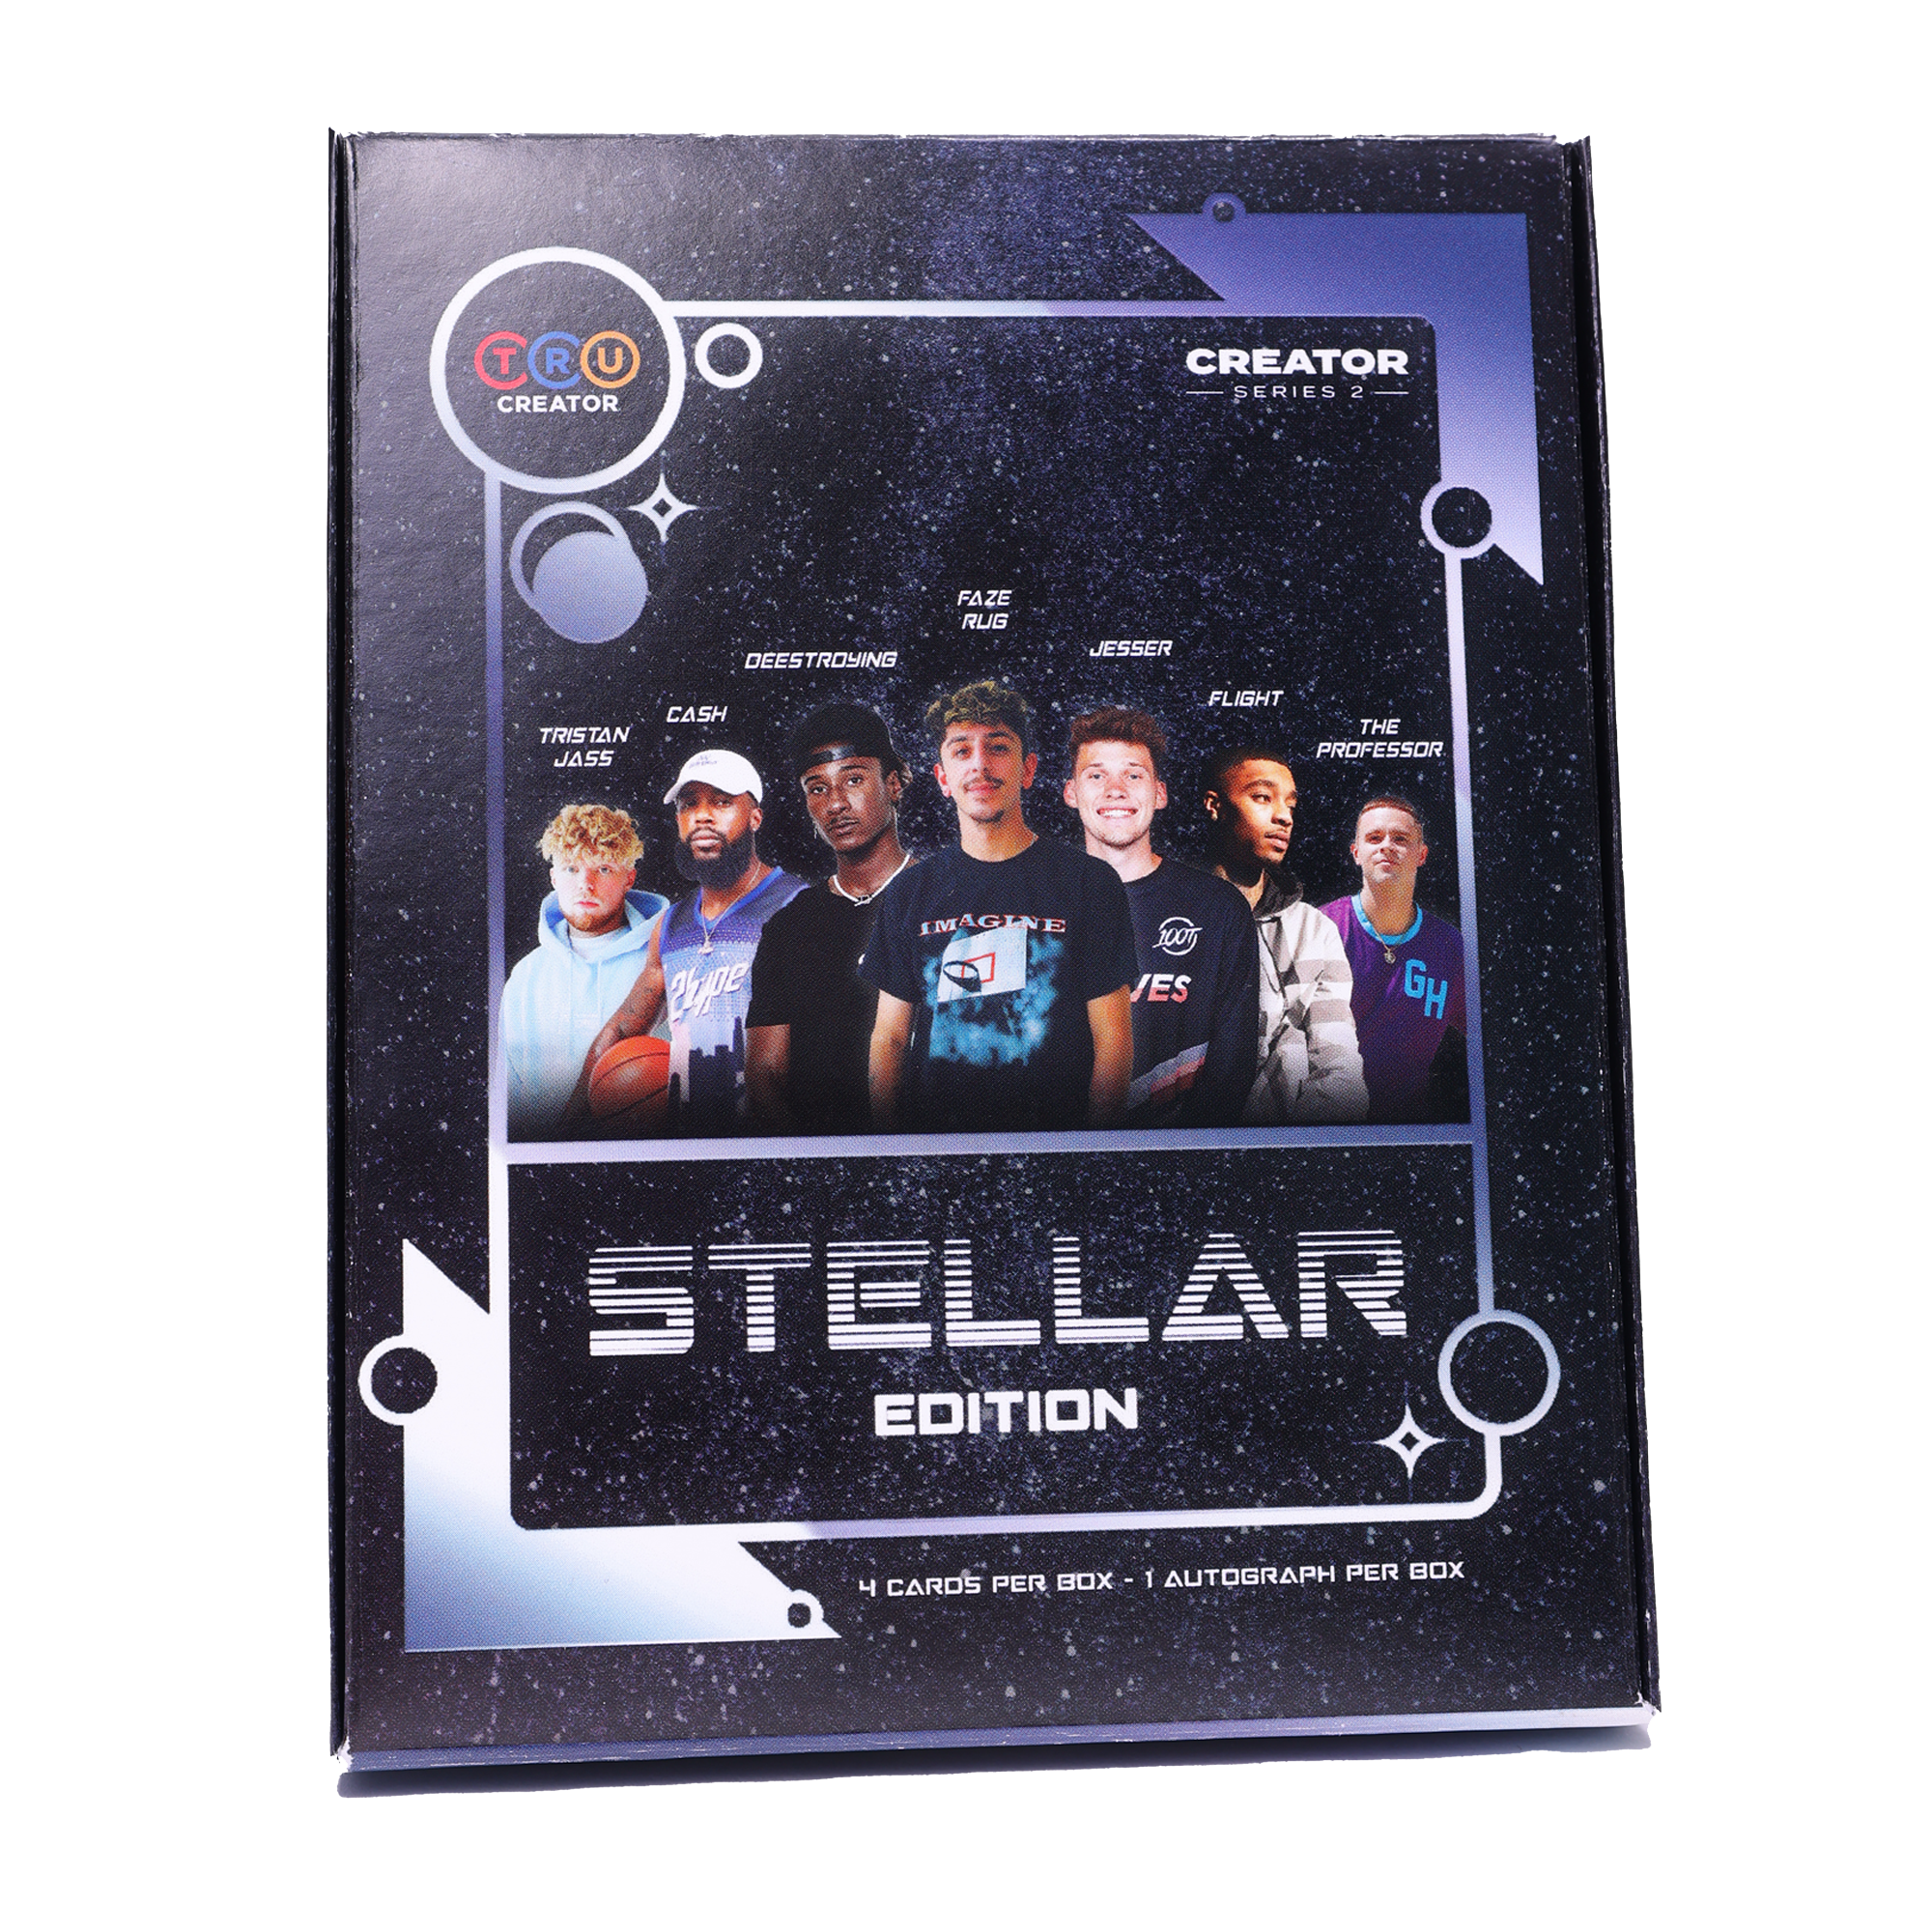 Stellar Edition Hobby Box